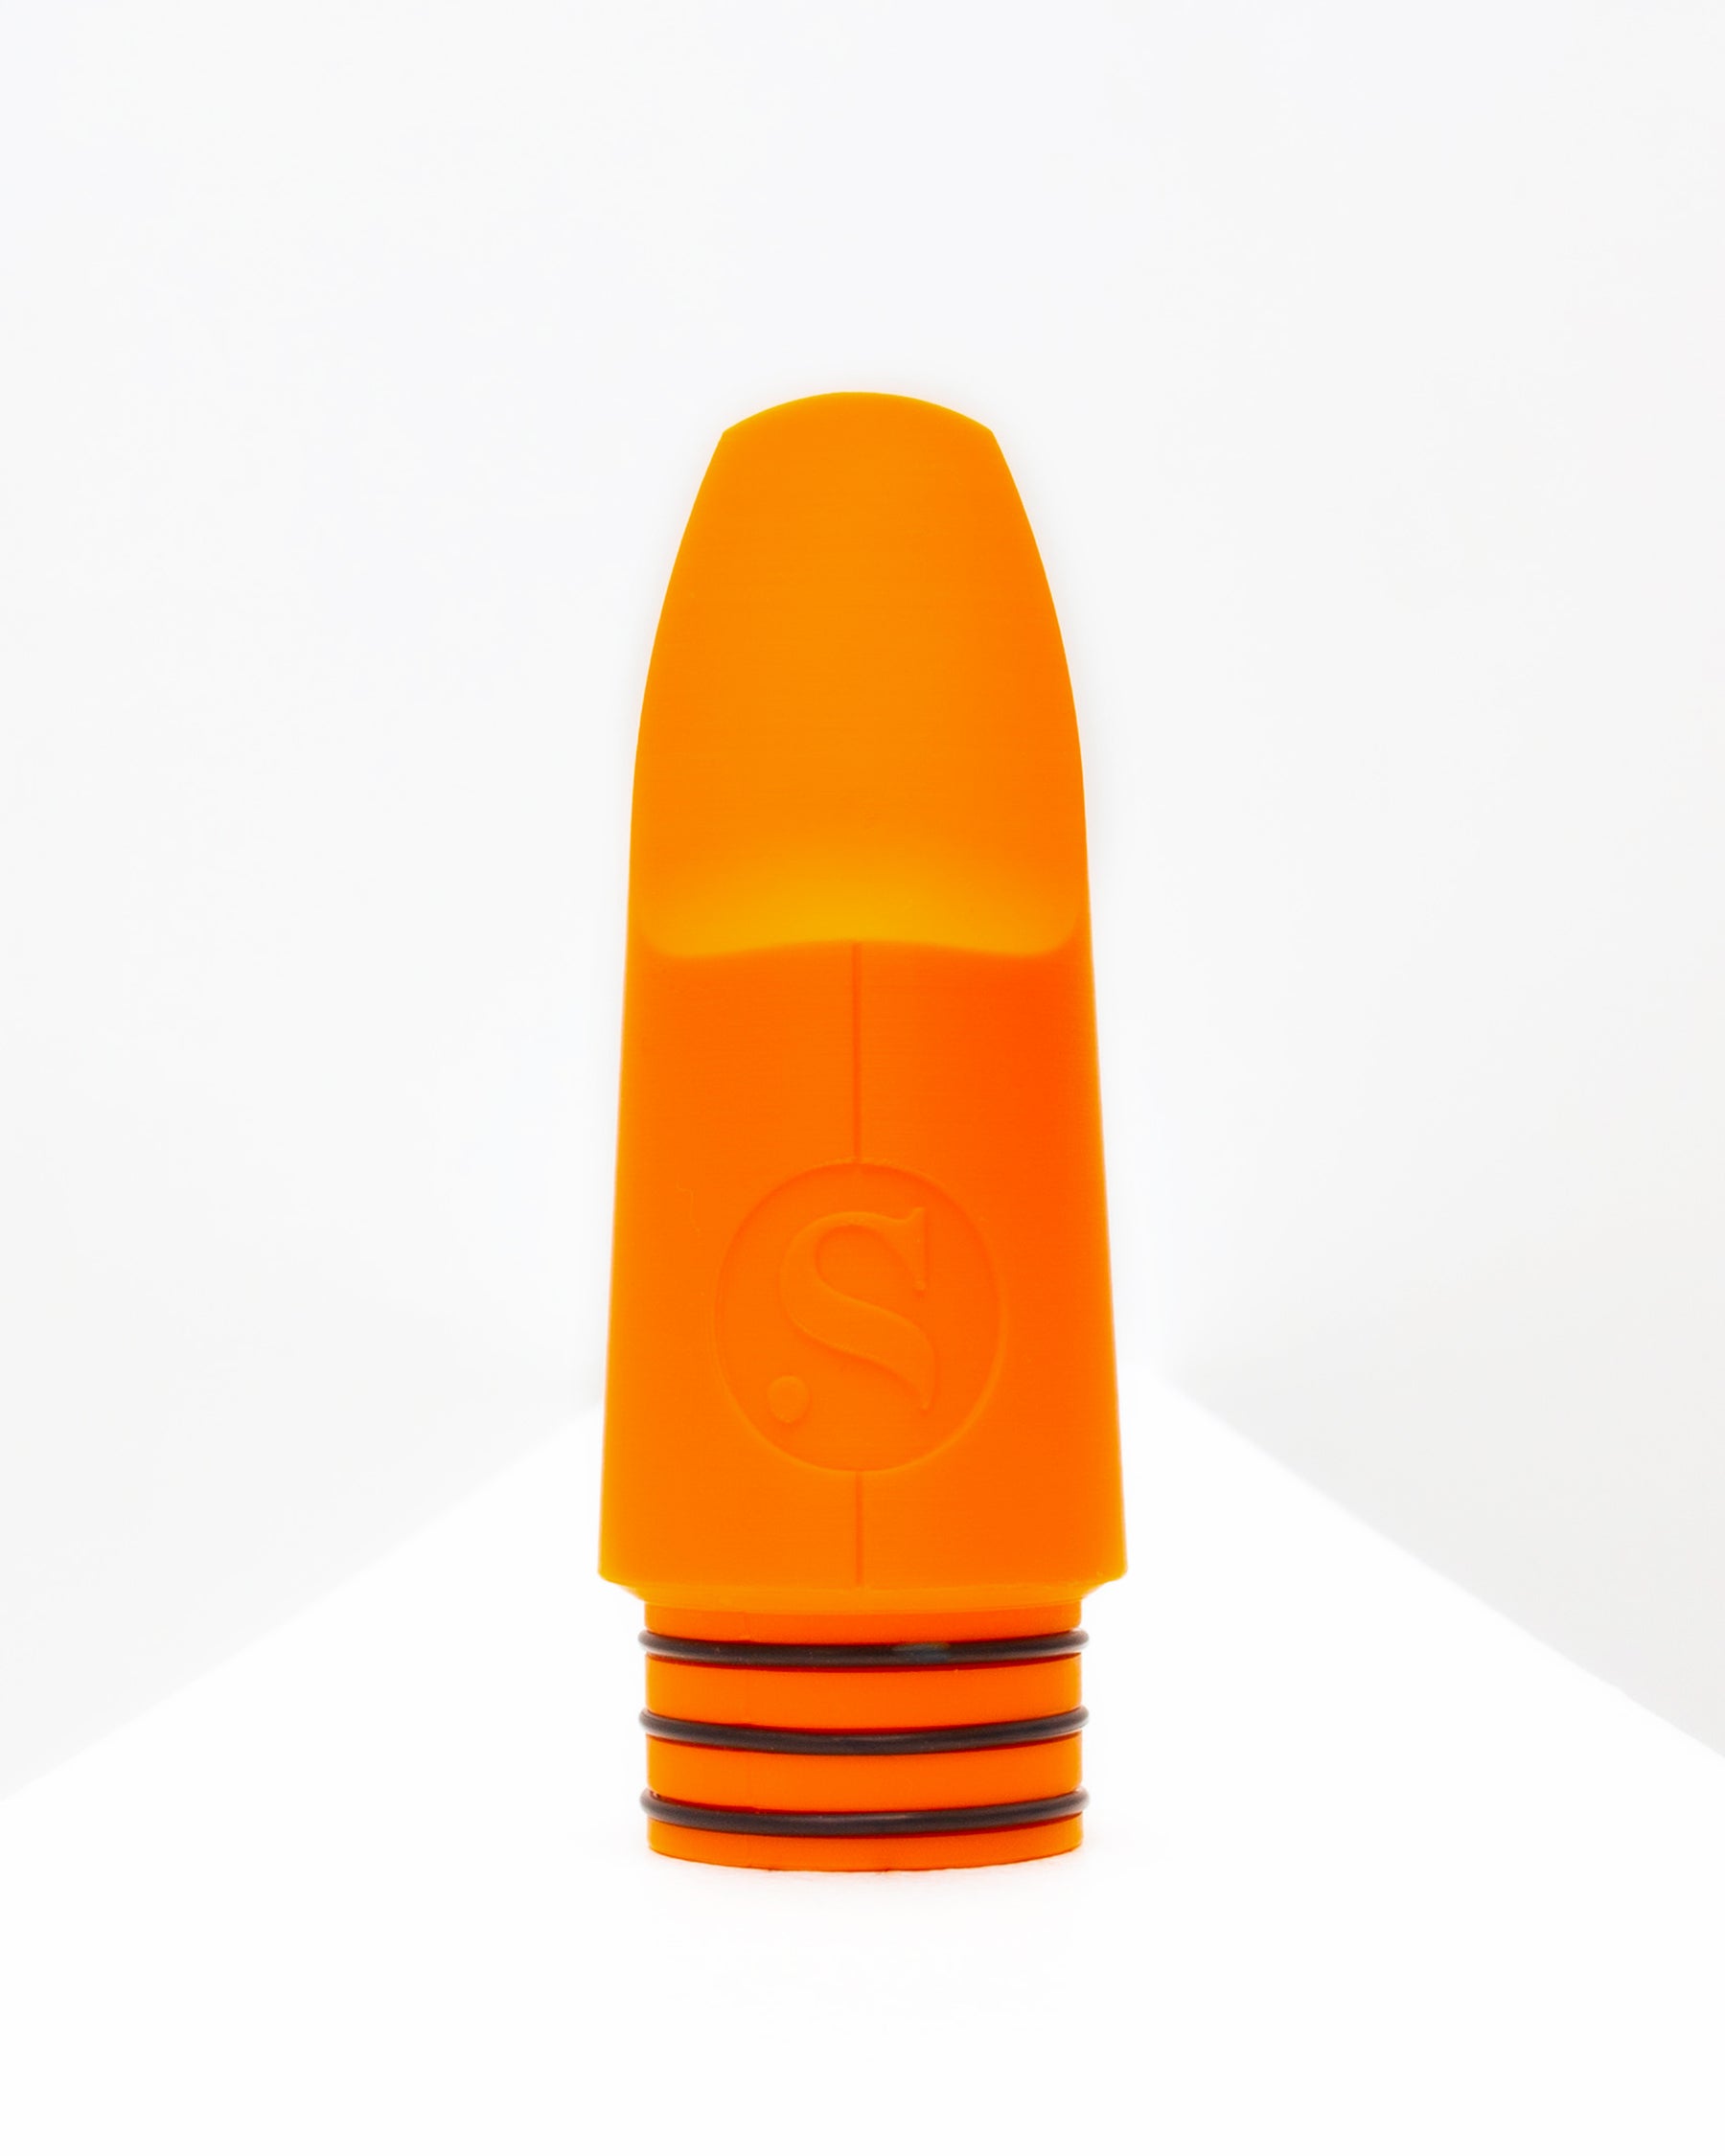 Bass Signature Clarinet mouthpiece - Daro Behroozi by Syos - Lava Orange